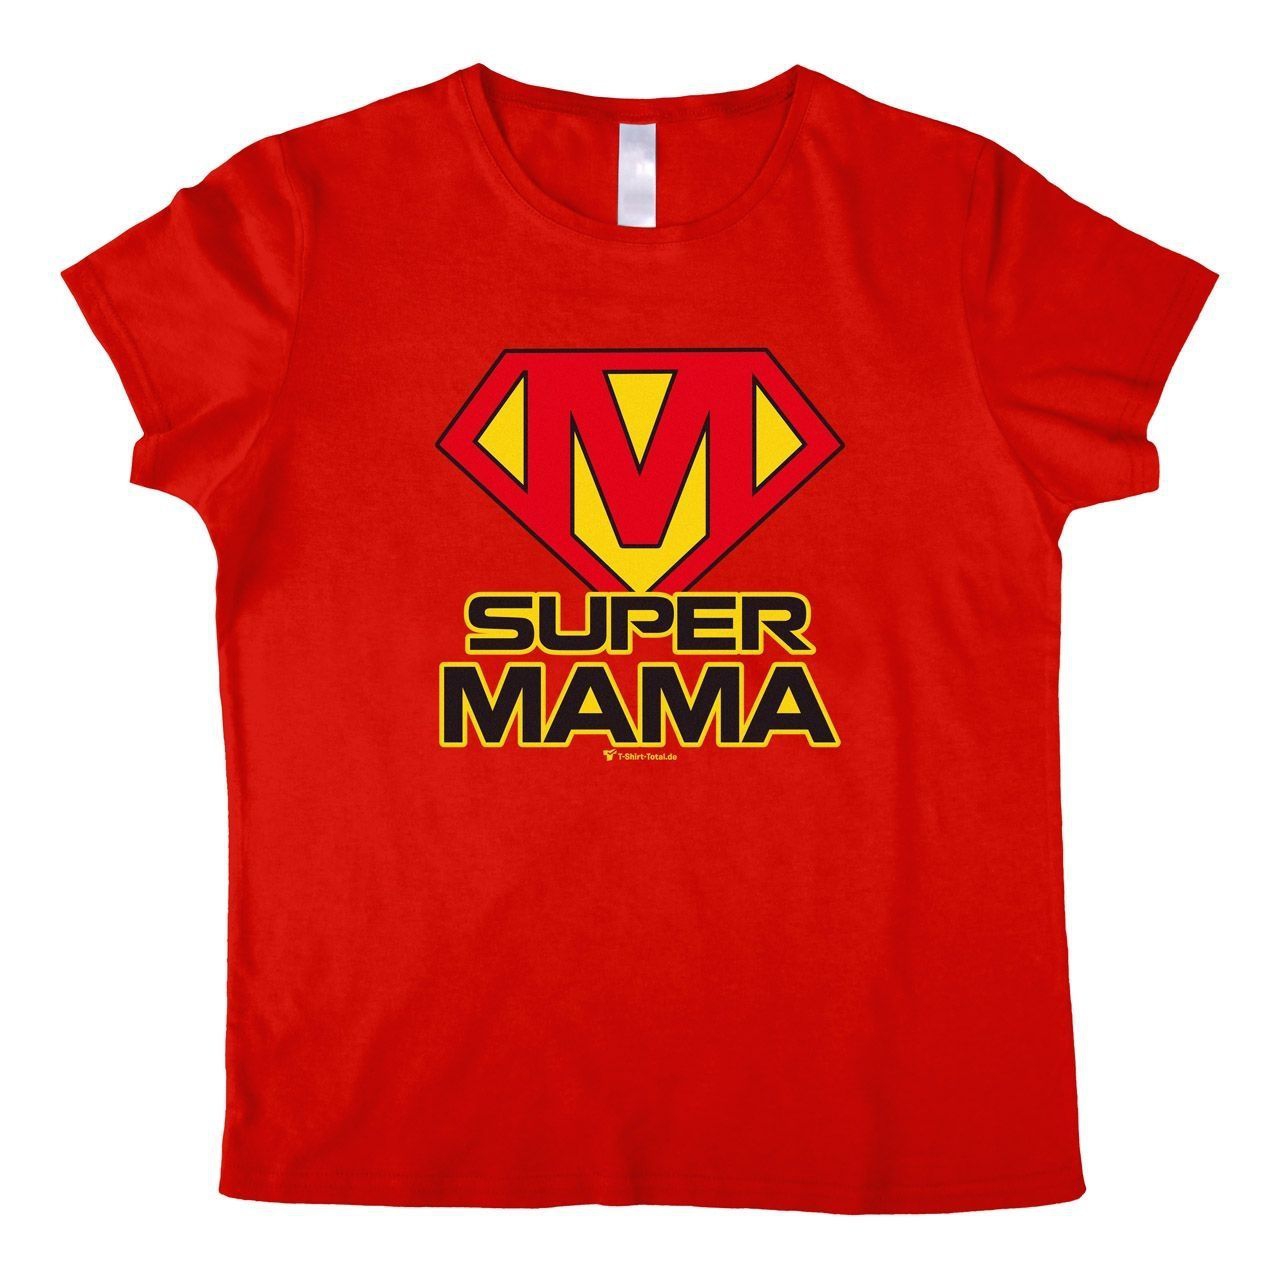 Super Mama Woman T-Shirt rot 2-Extra Large